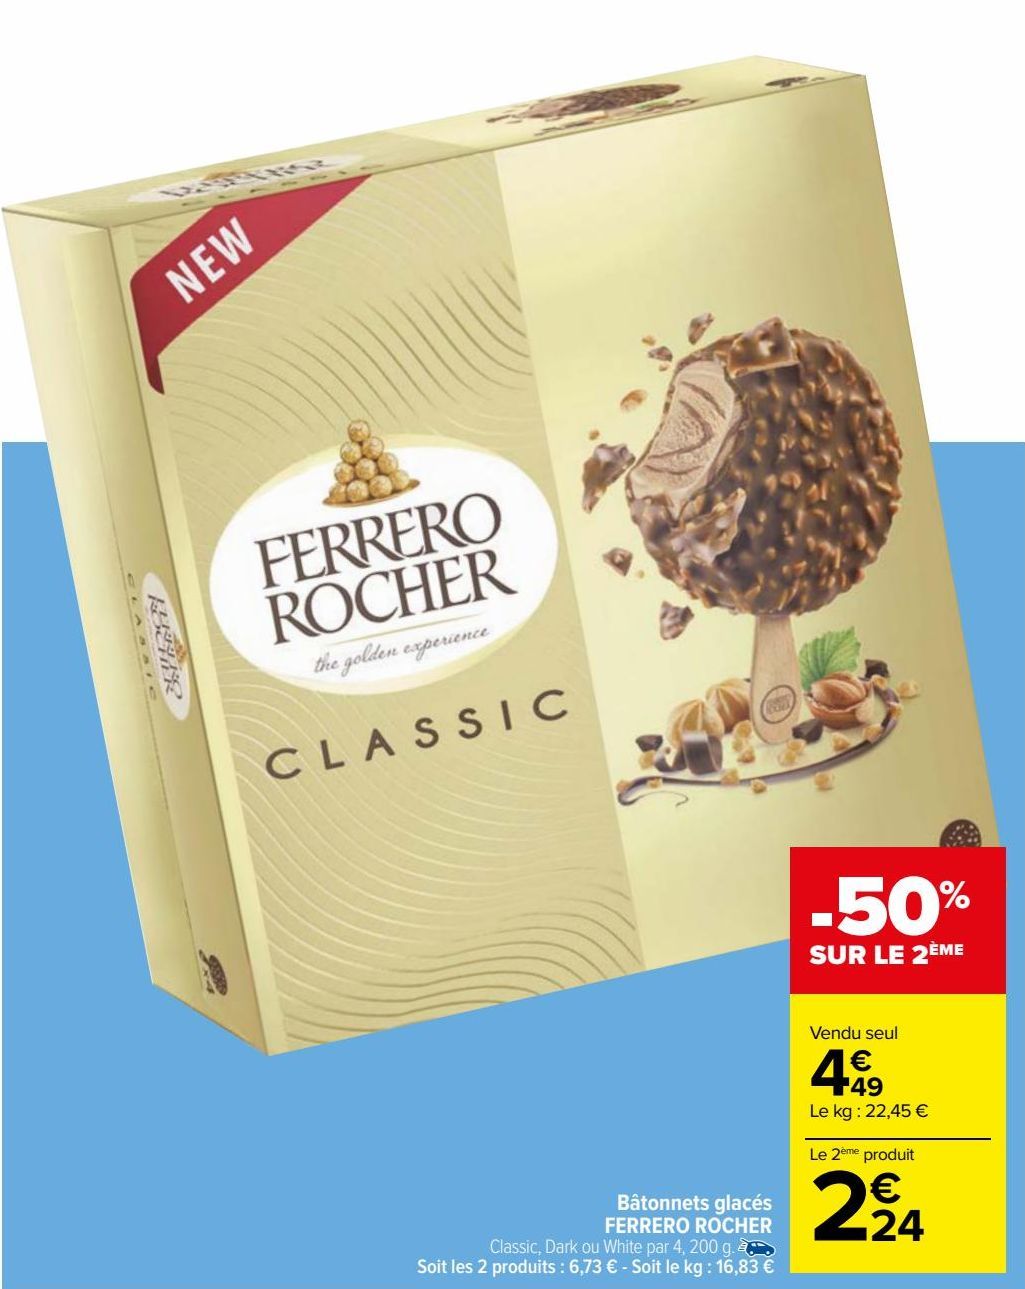 Batonnets glacés Ferrero Rocher